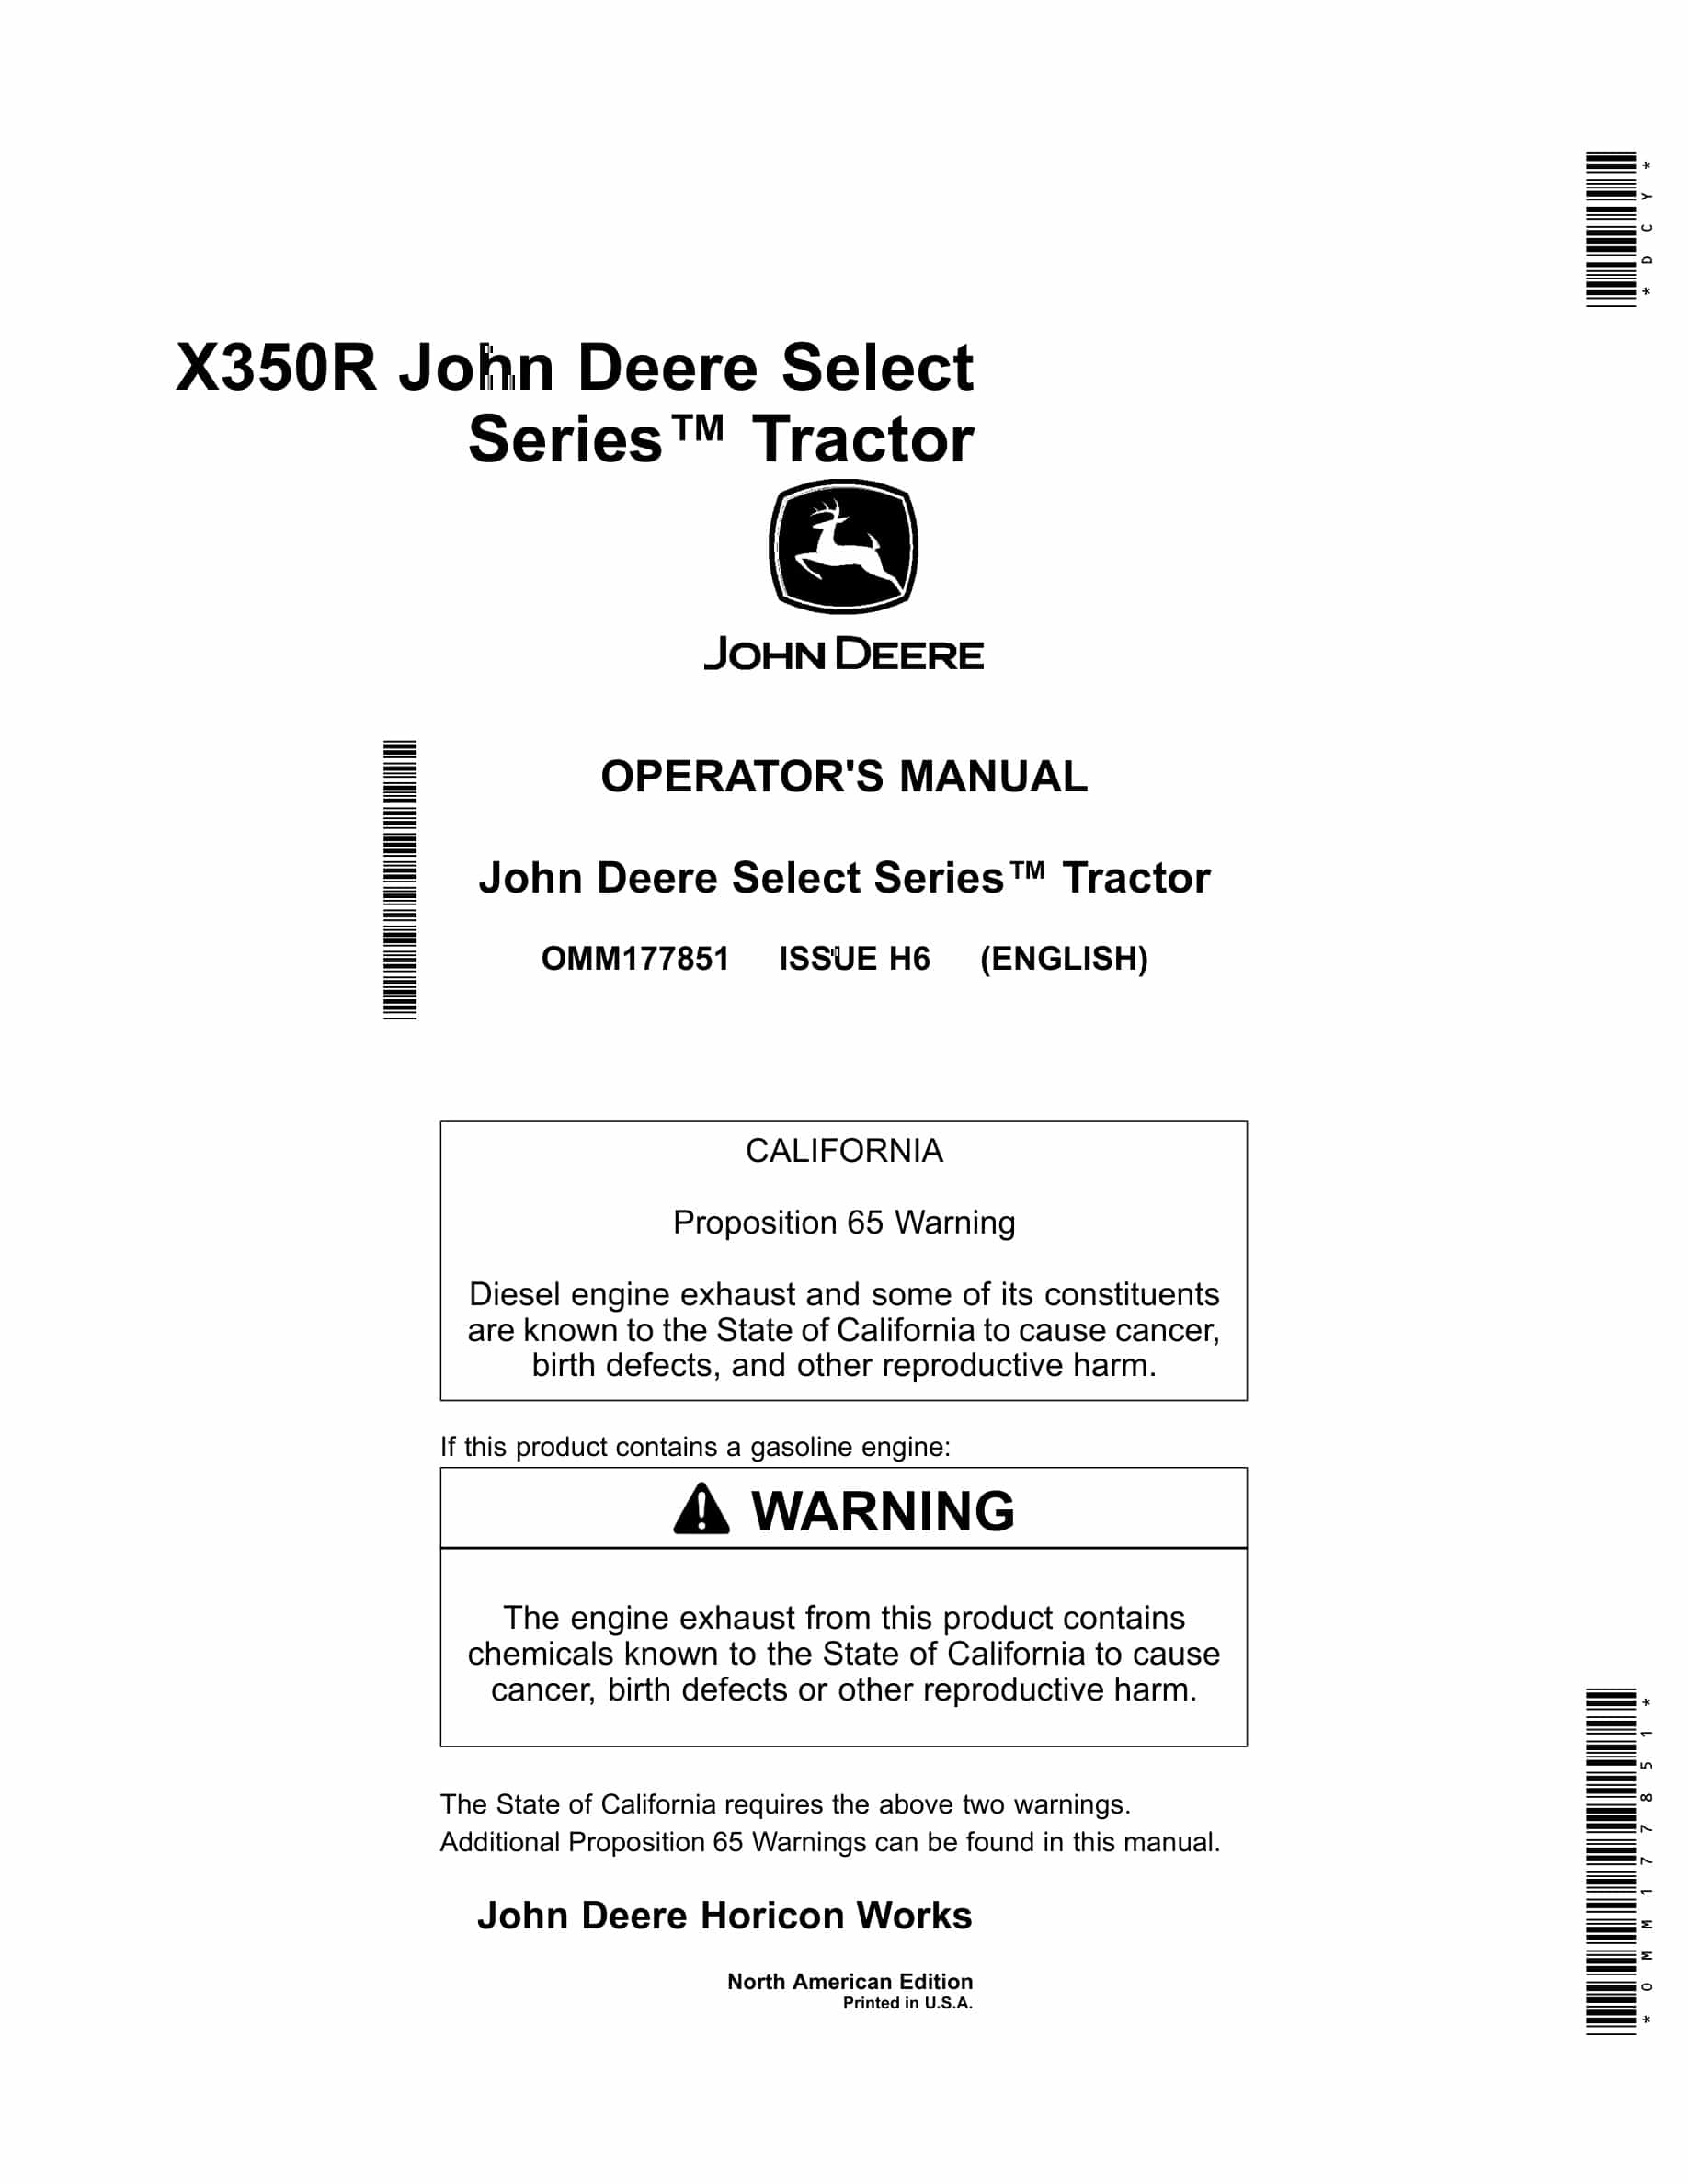 John Deere X350R Tractor Operator Manual OMM177851-1